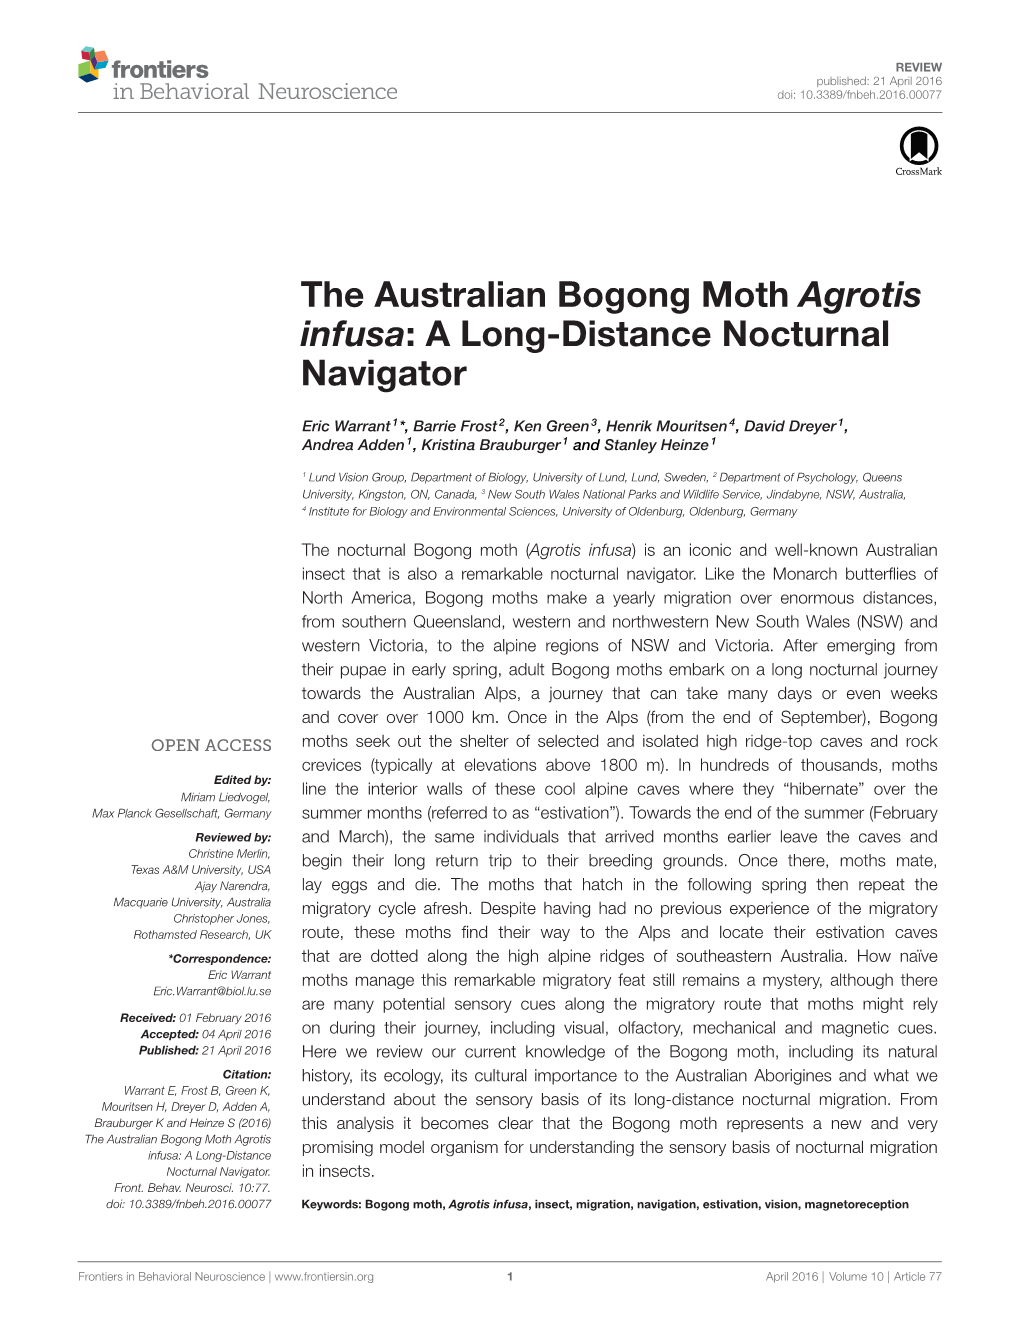 The Australian Bogong Moth Agrotis Infusa: a Long-Distance Nocturnal Navigator